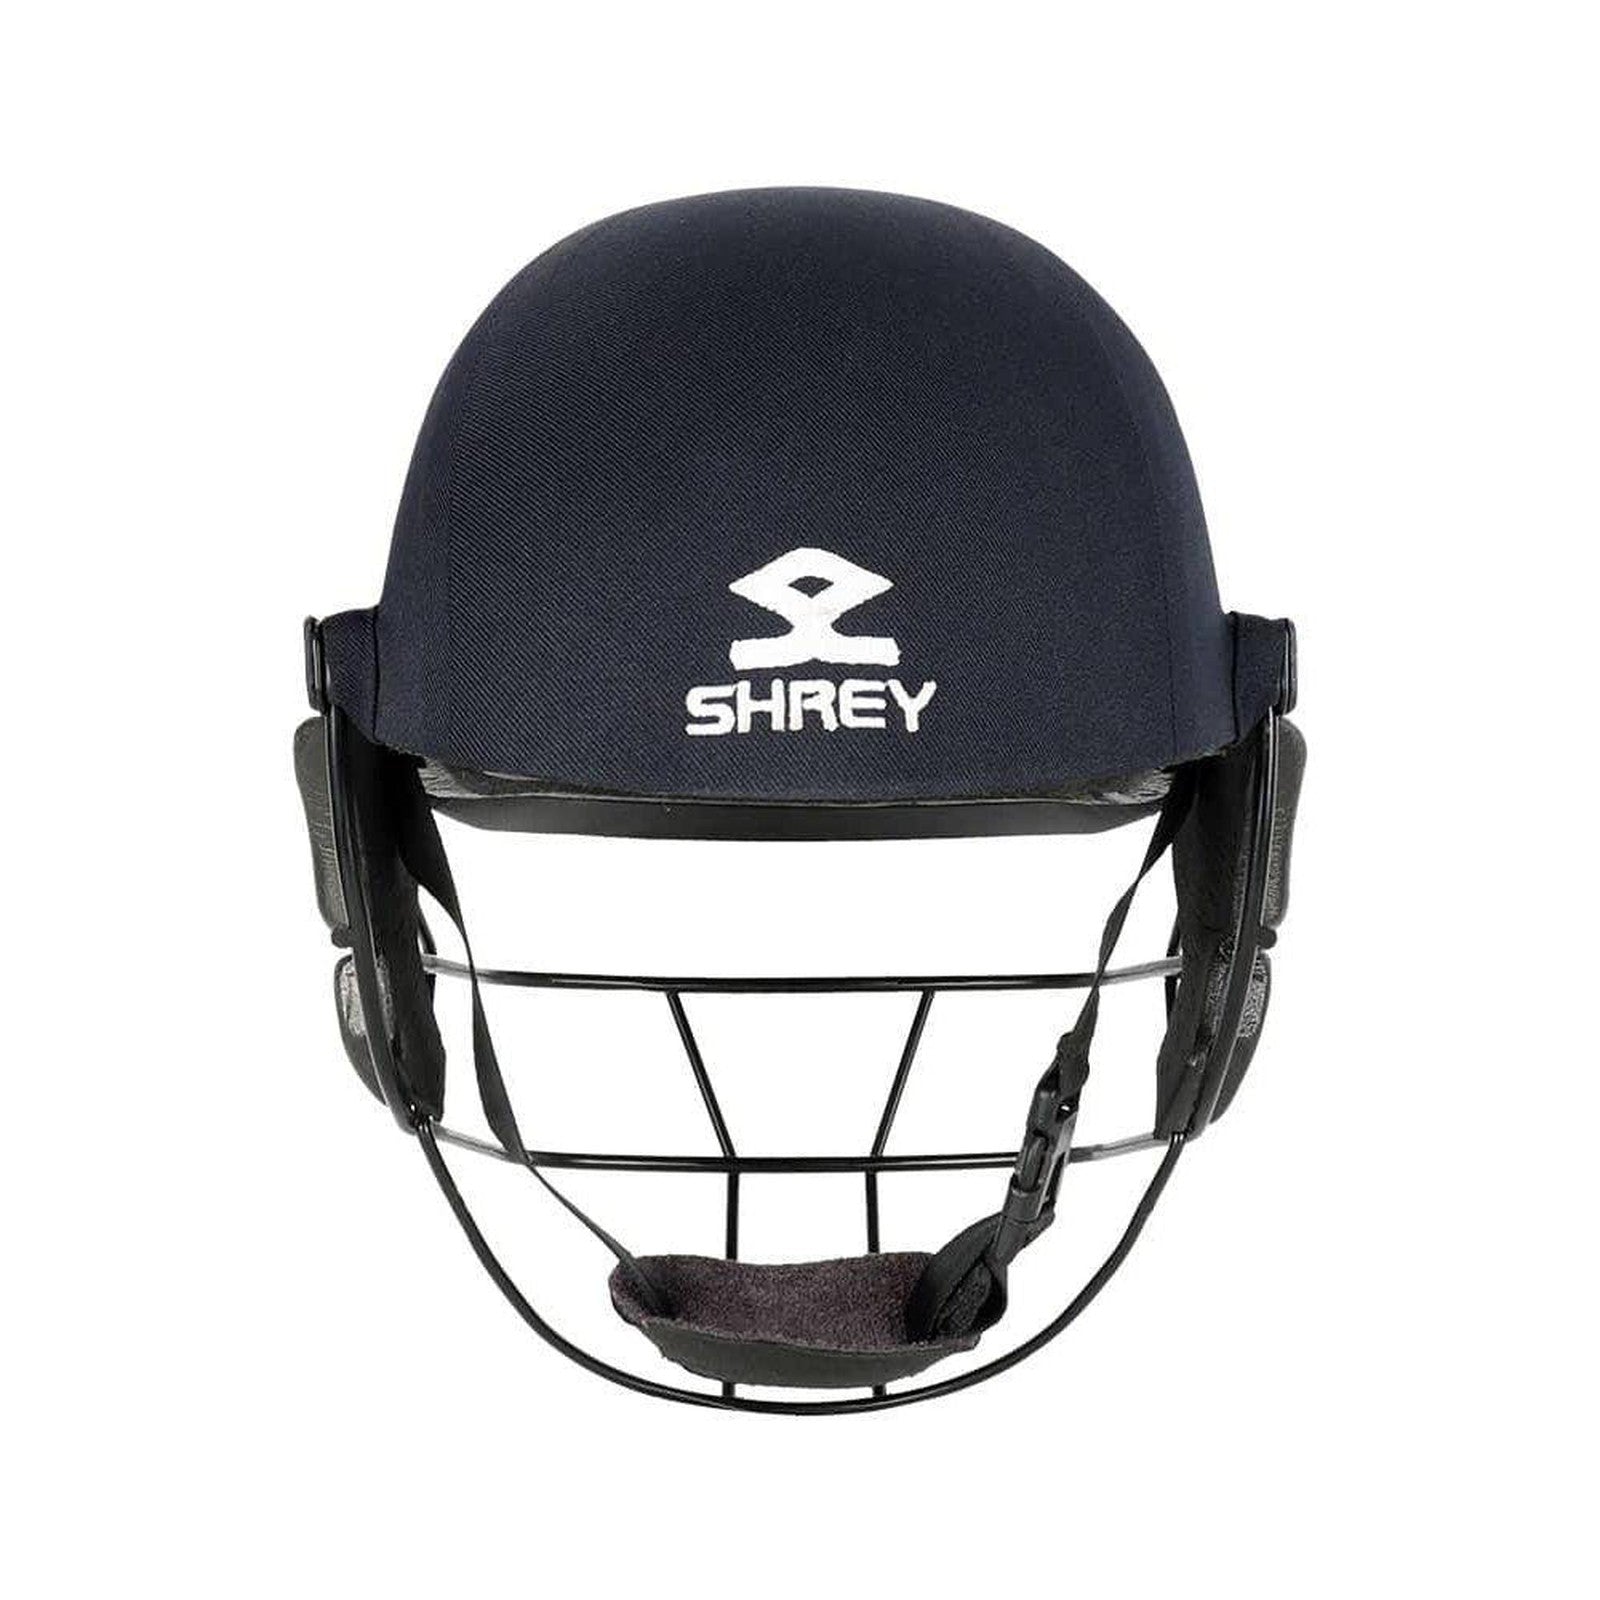 Shrey Armor 2.0 Cricket Helmet With Mild Steel Visor - Navy Youth